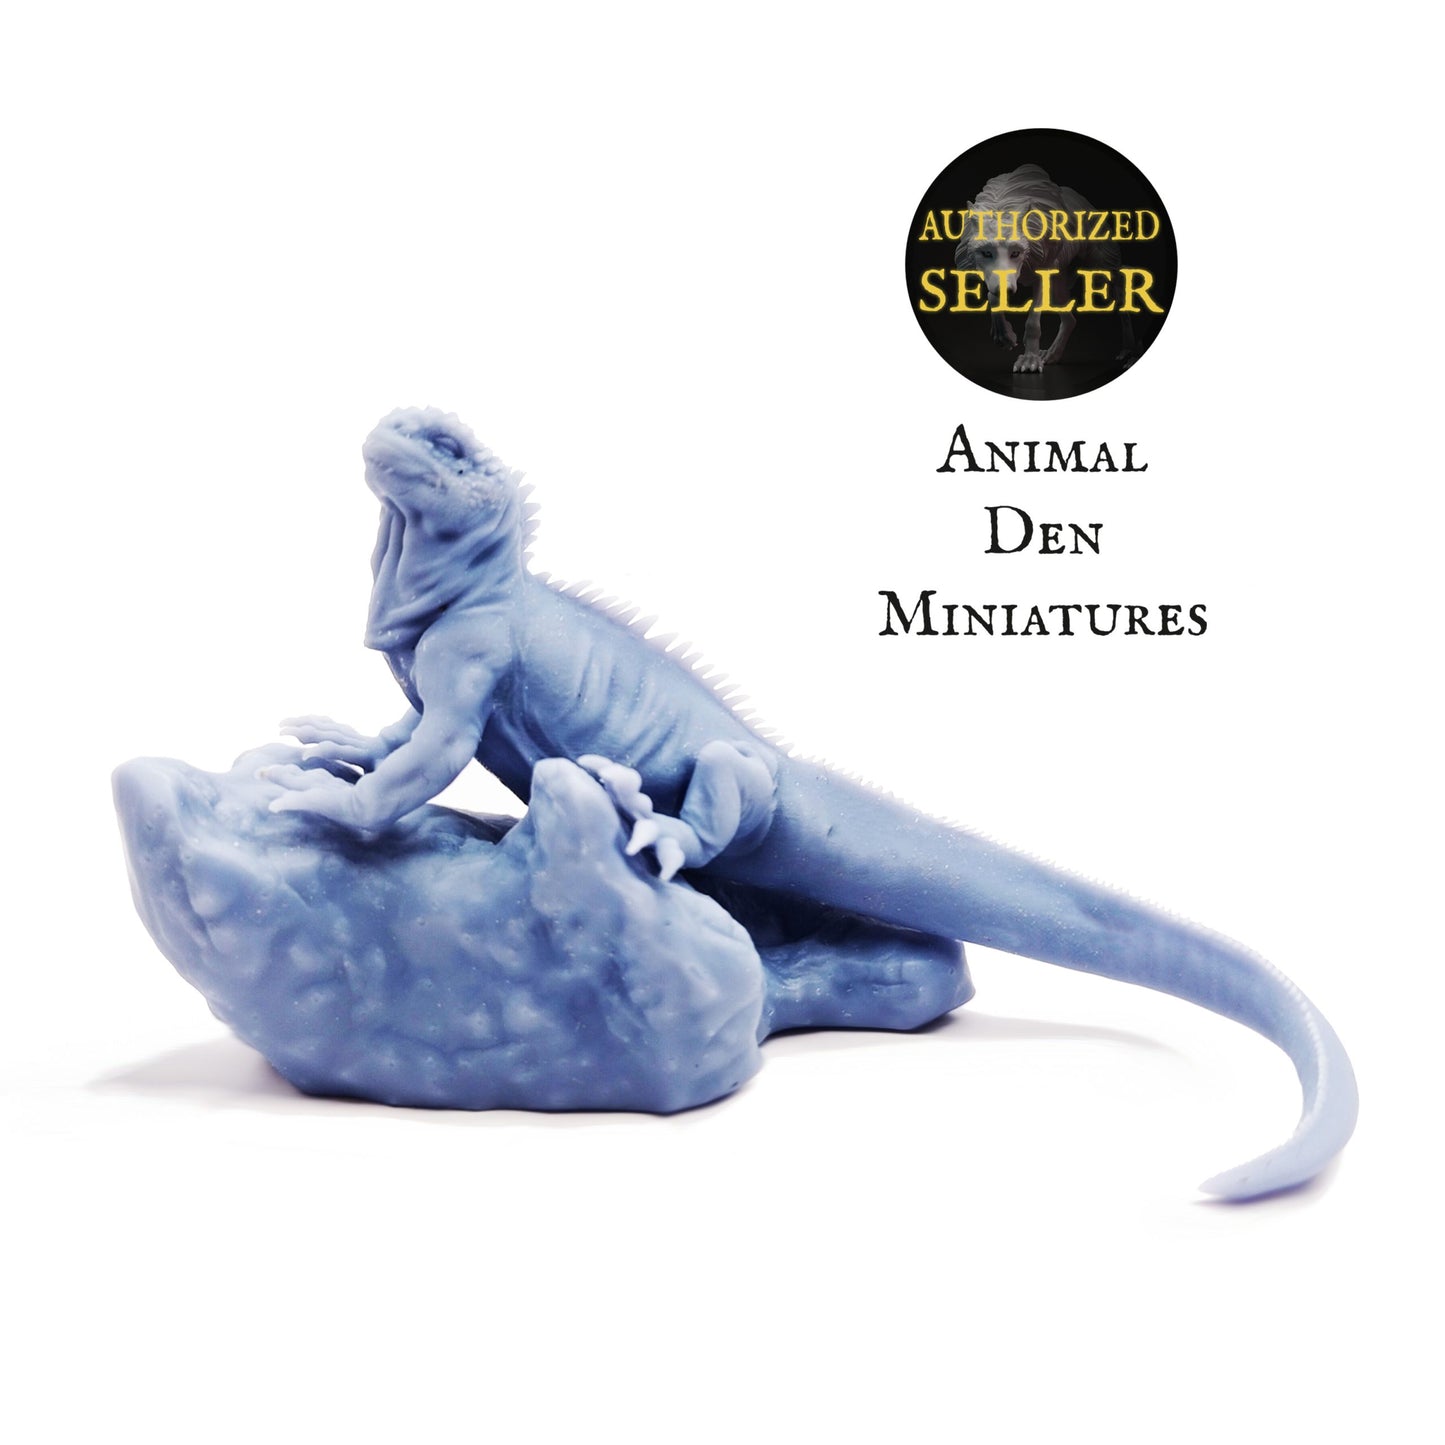 Marine Iguana - 1:16 Scale Miniature from Animal Den Miniatures